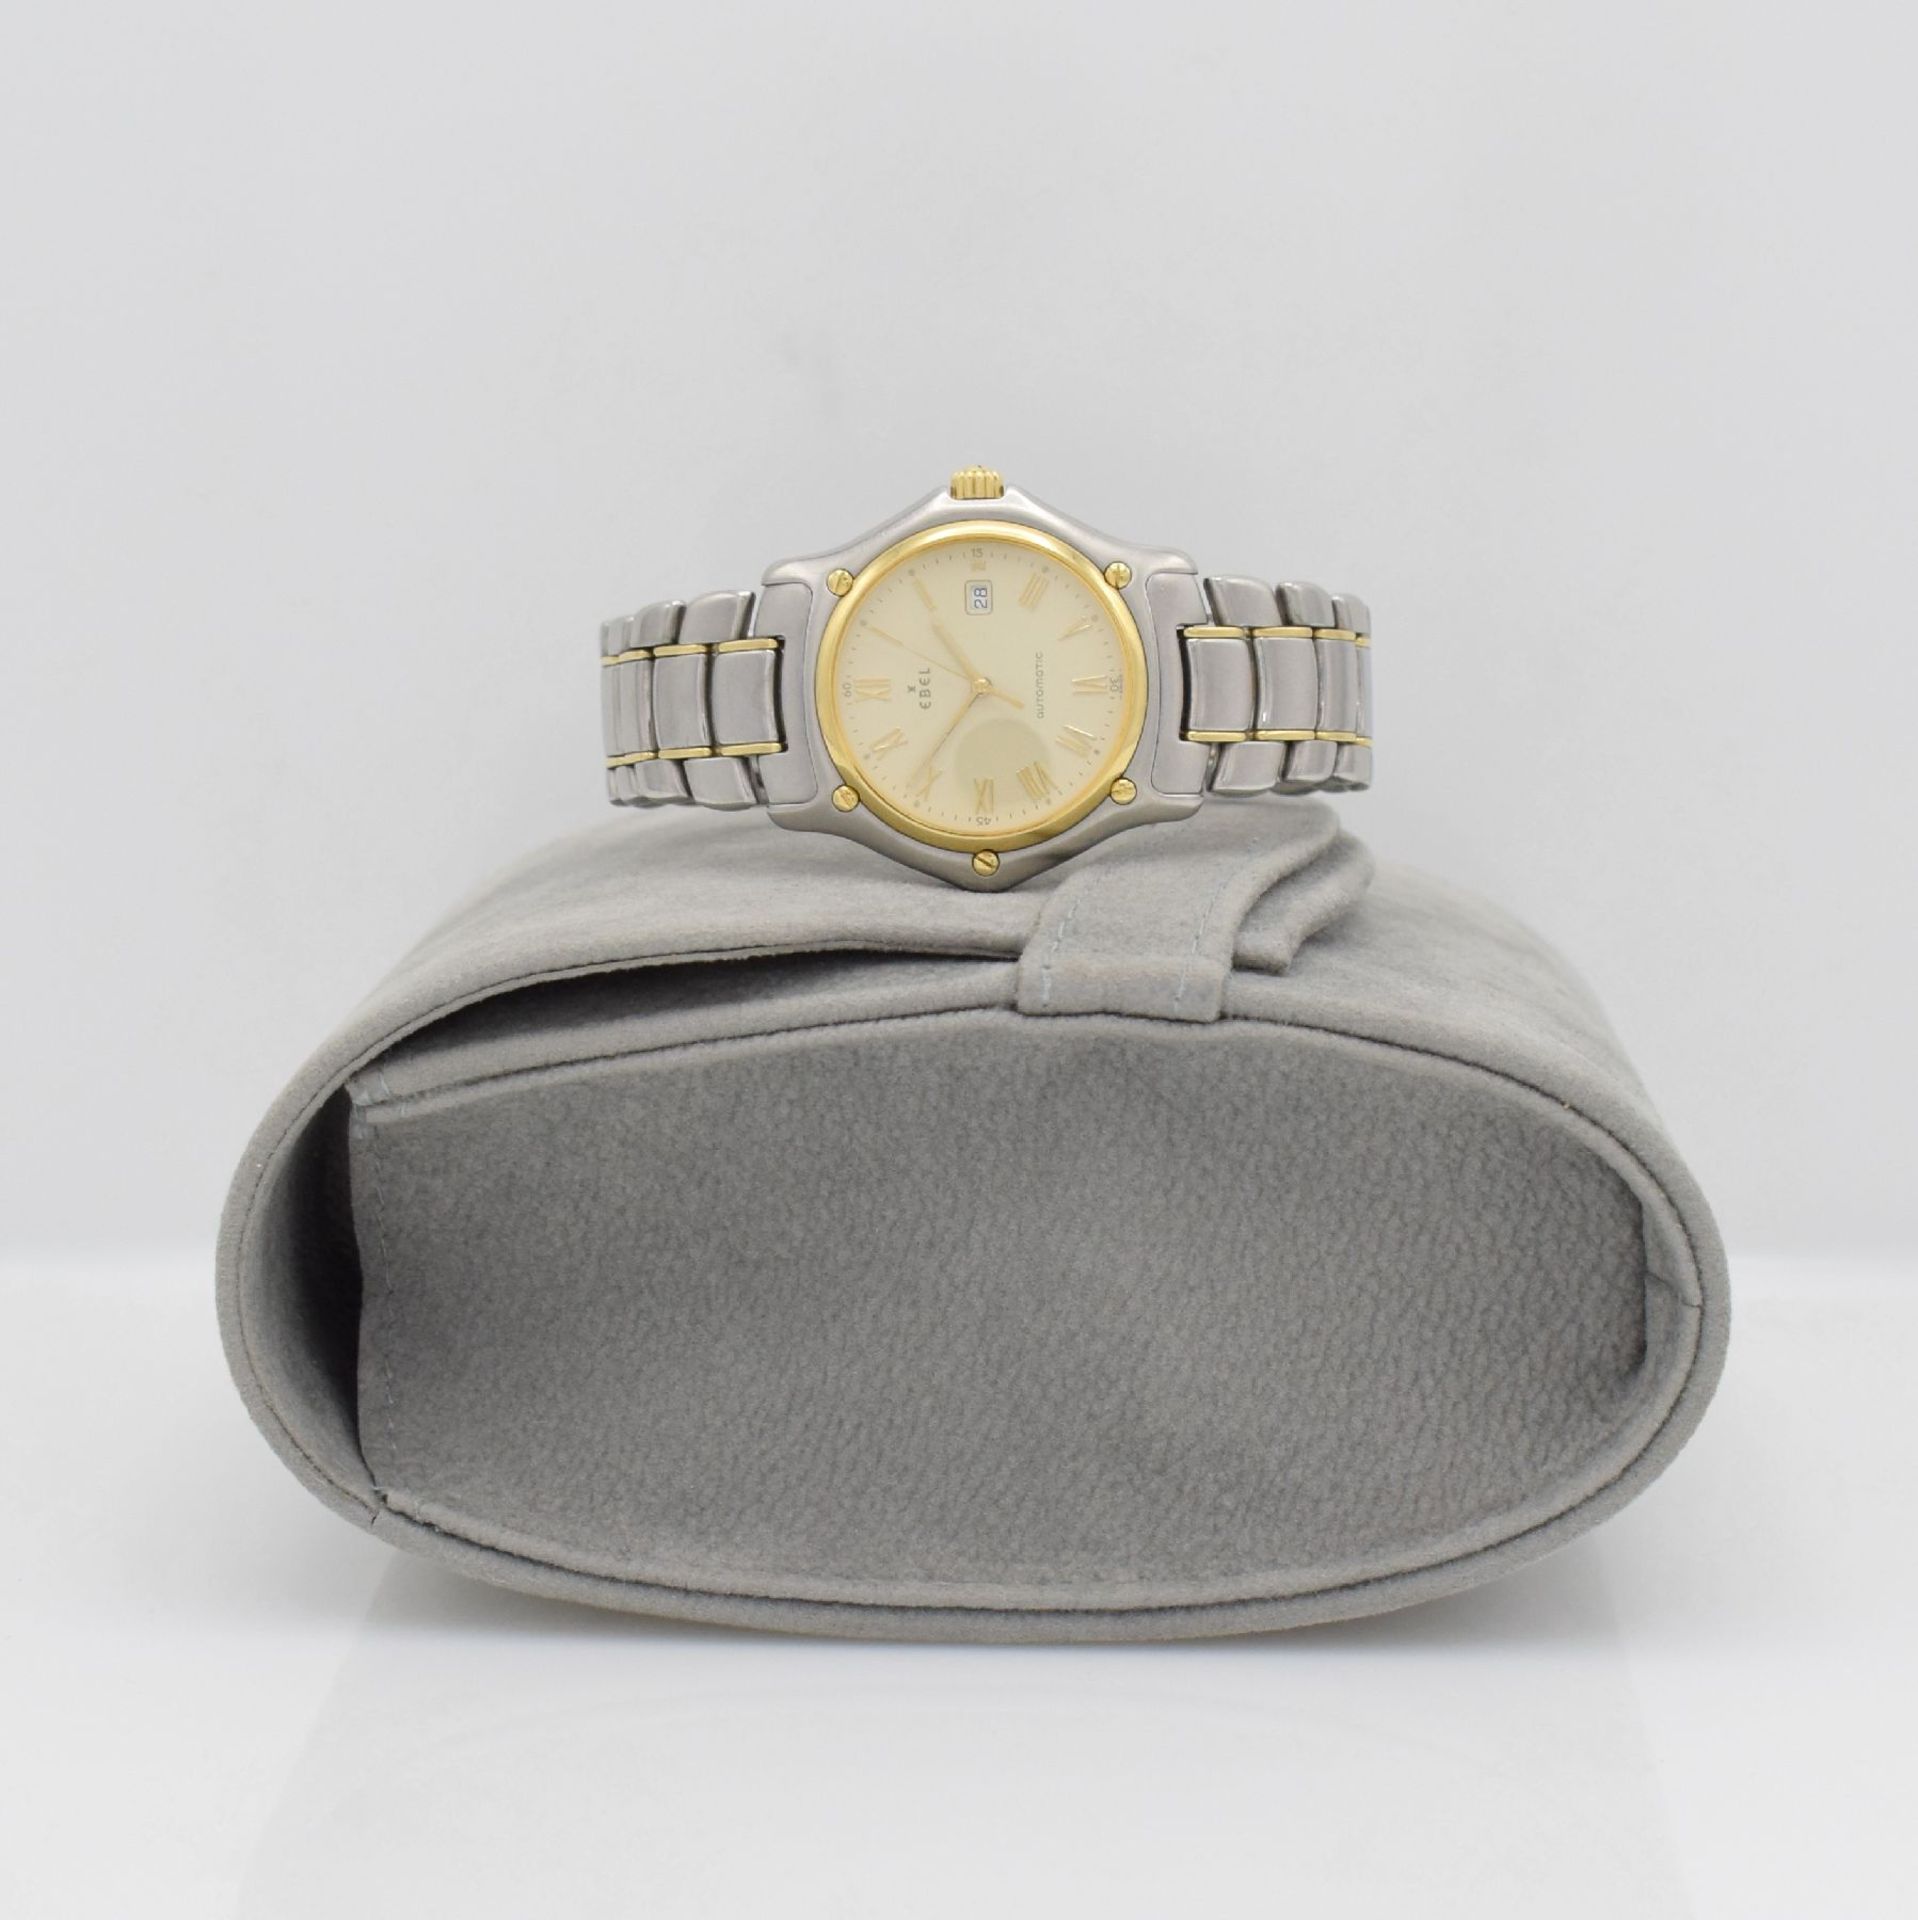 EBEL 1911 wristwatch in stainless steel/gold, Switzerland sold according to warranty card inMay - Bild 9 aus 10